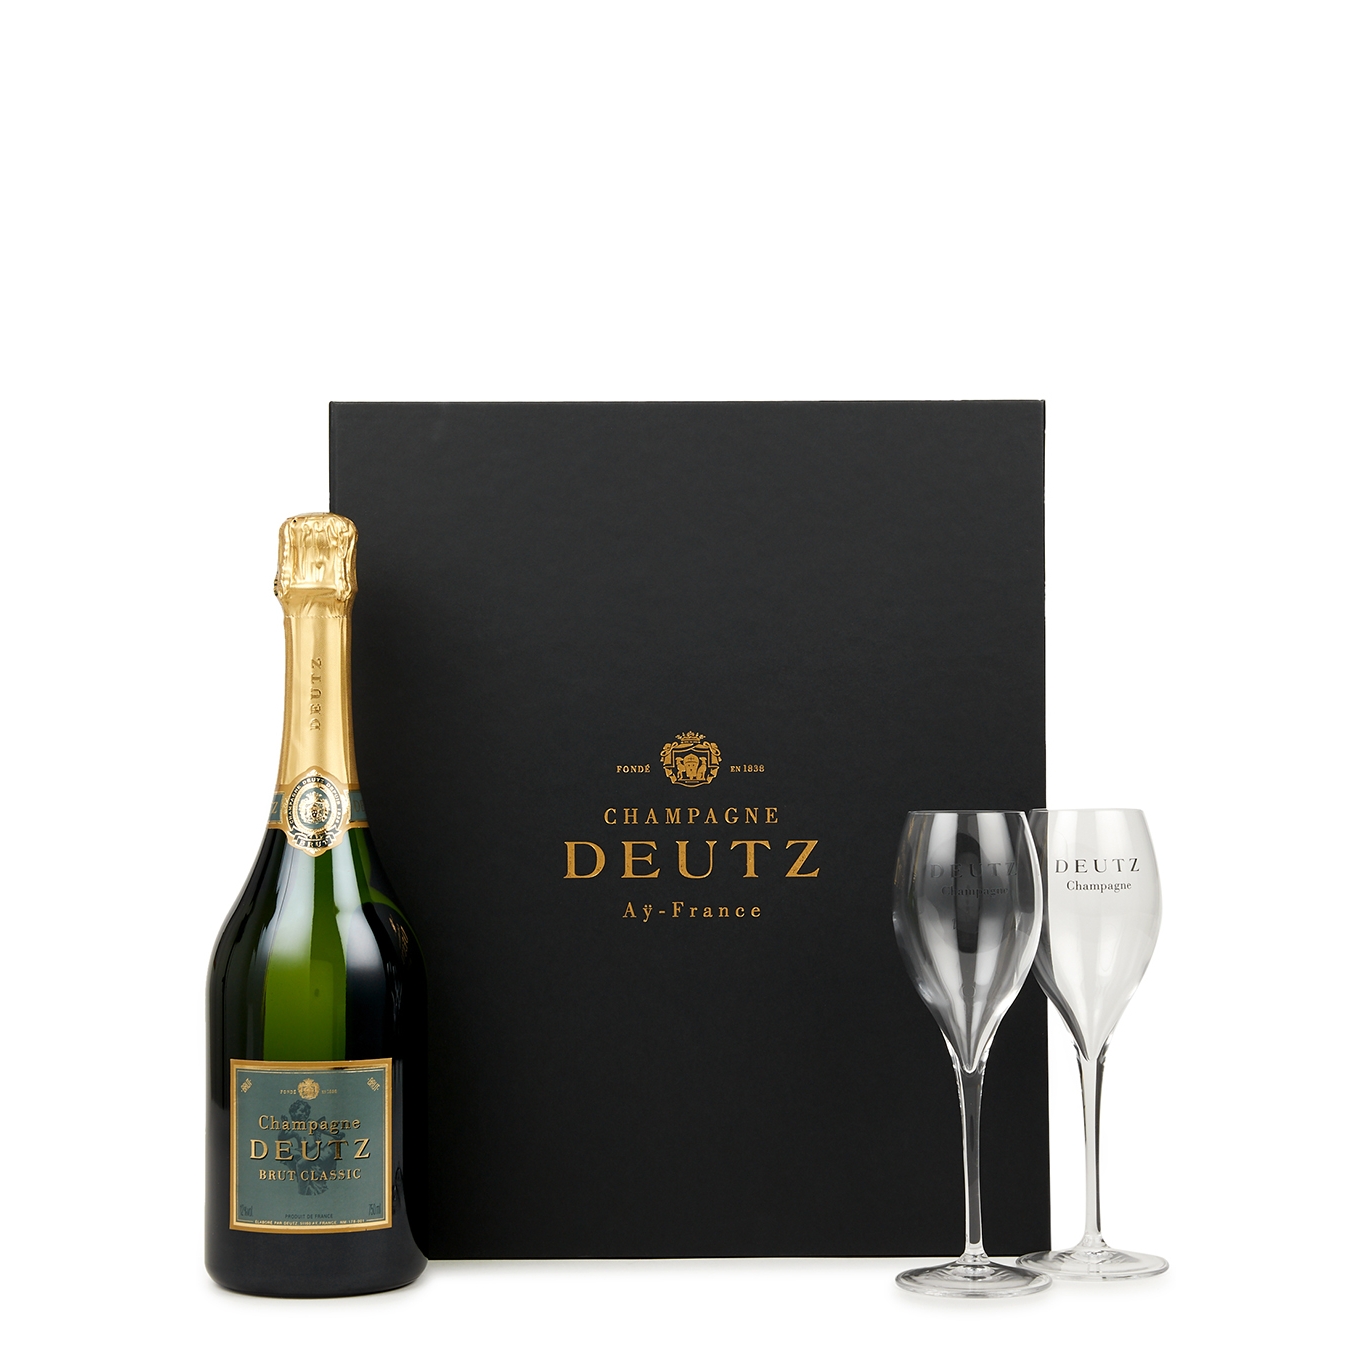 Deutz Brut Classic Champagne NV & Flutes Gift Set Sparkling Wine